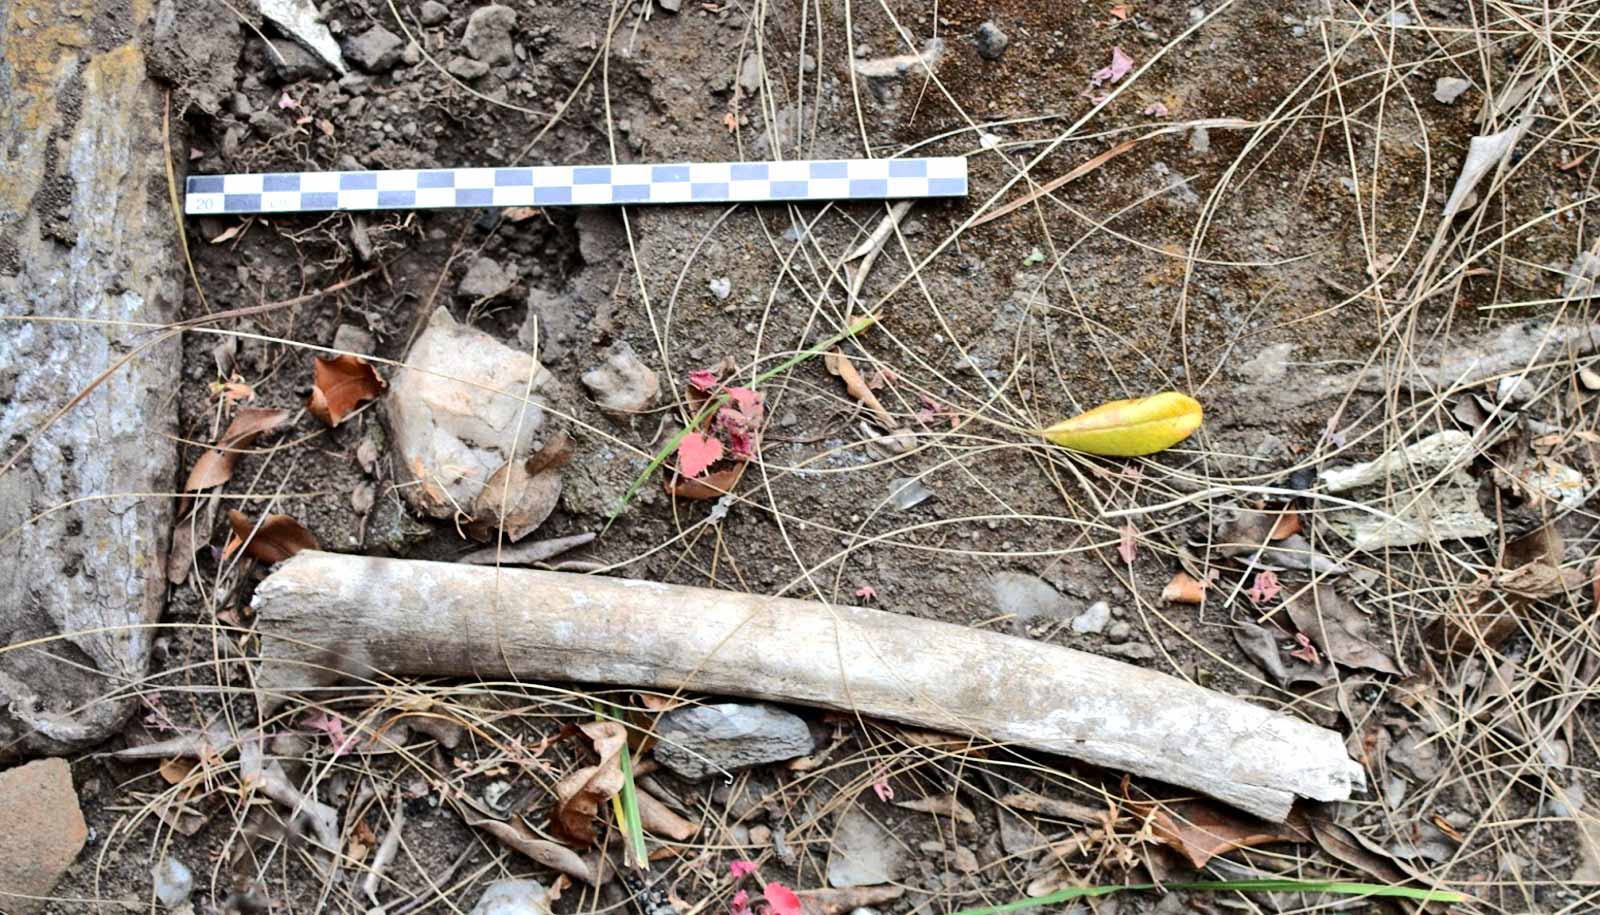 leg bone at Fingira Rock site